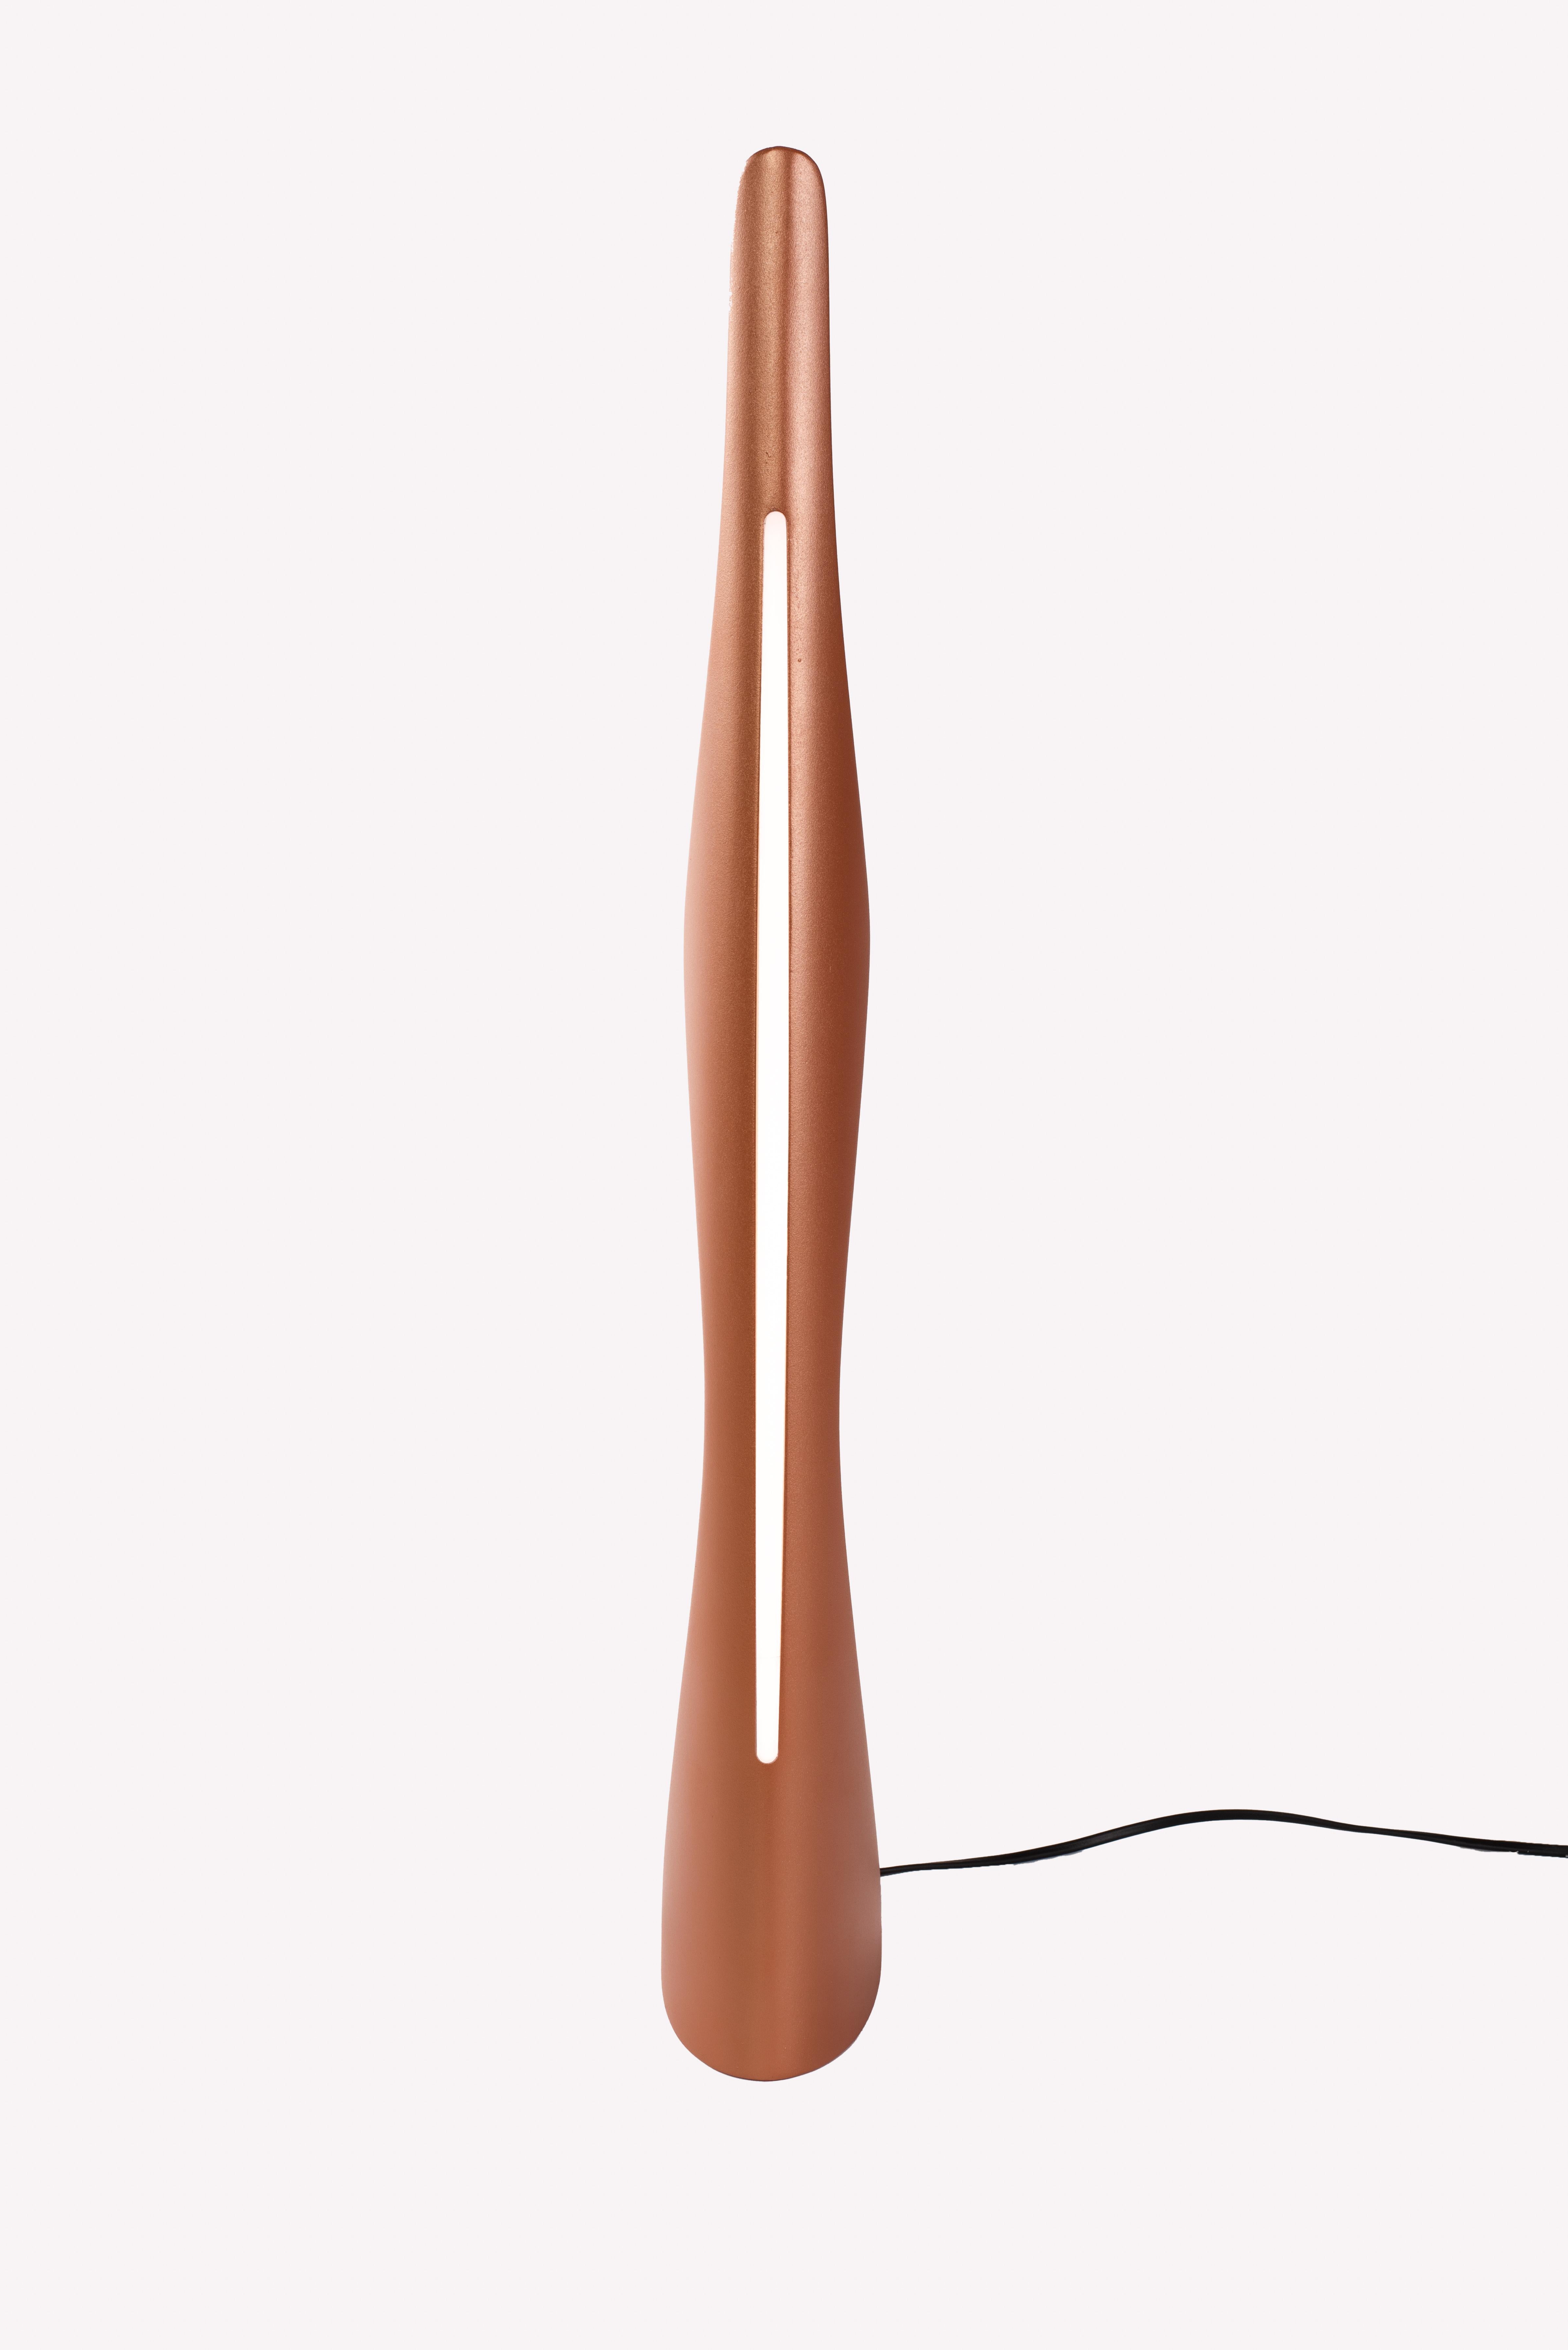 Modern by Cyril Rumpler Handmade Table Light Aluminium Silhouette Copper For Sale 4